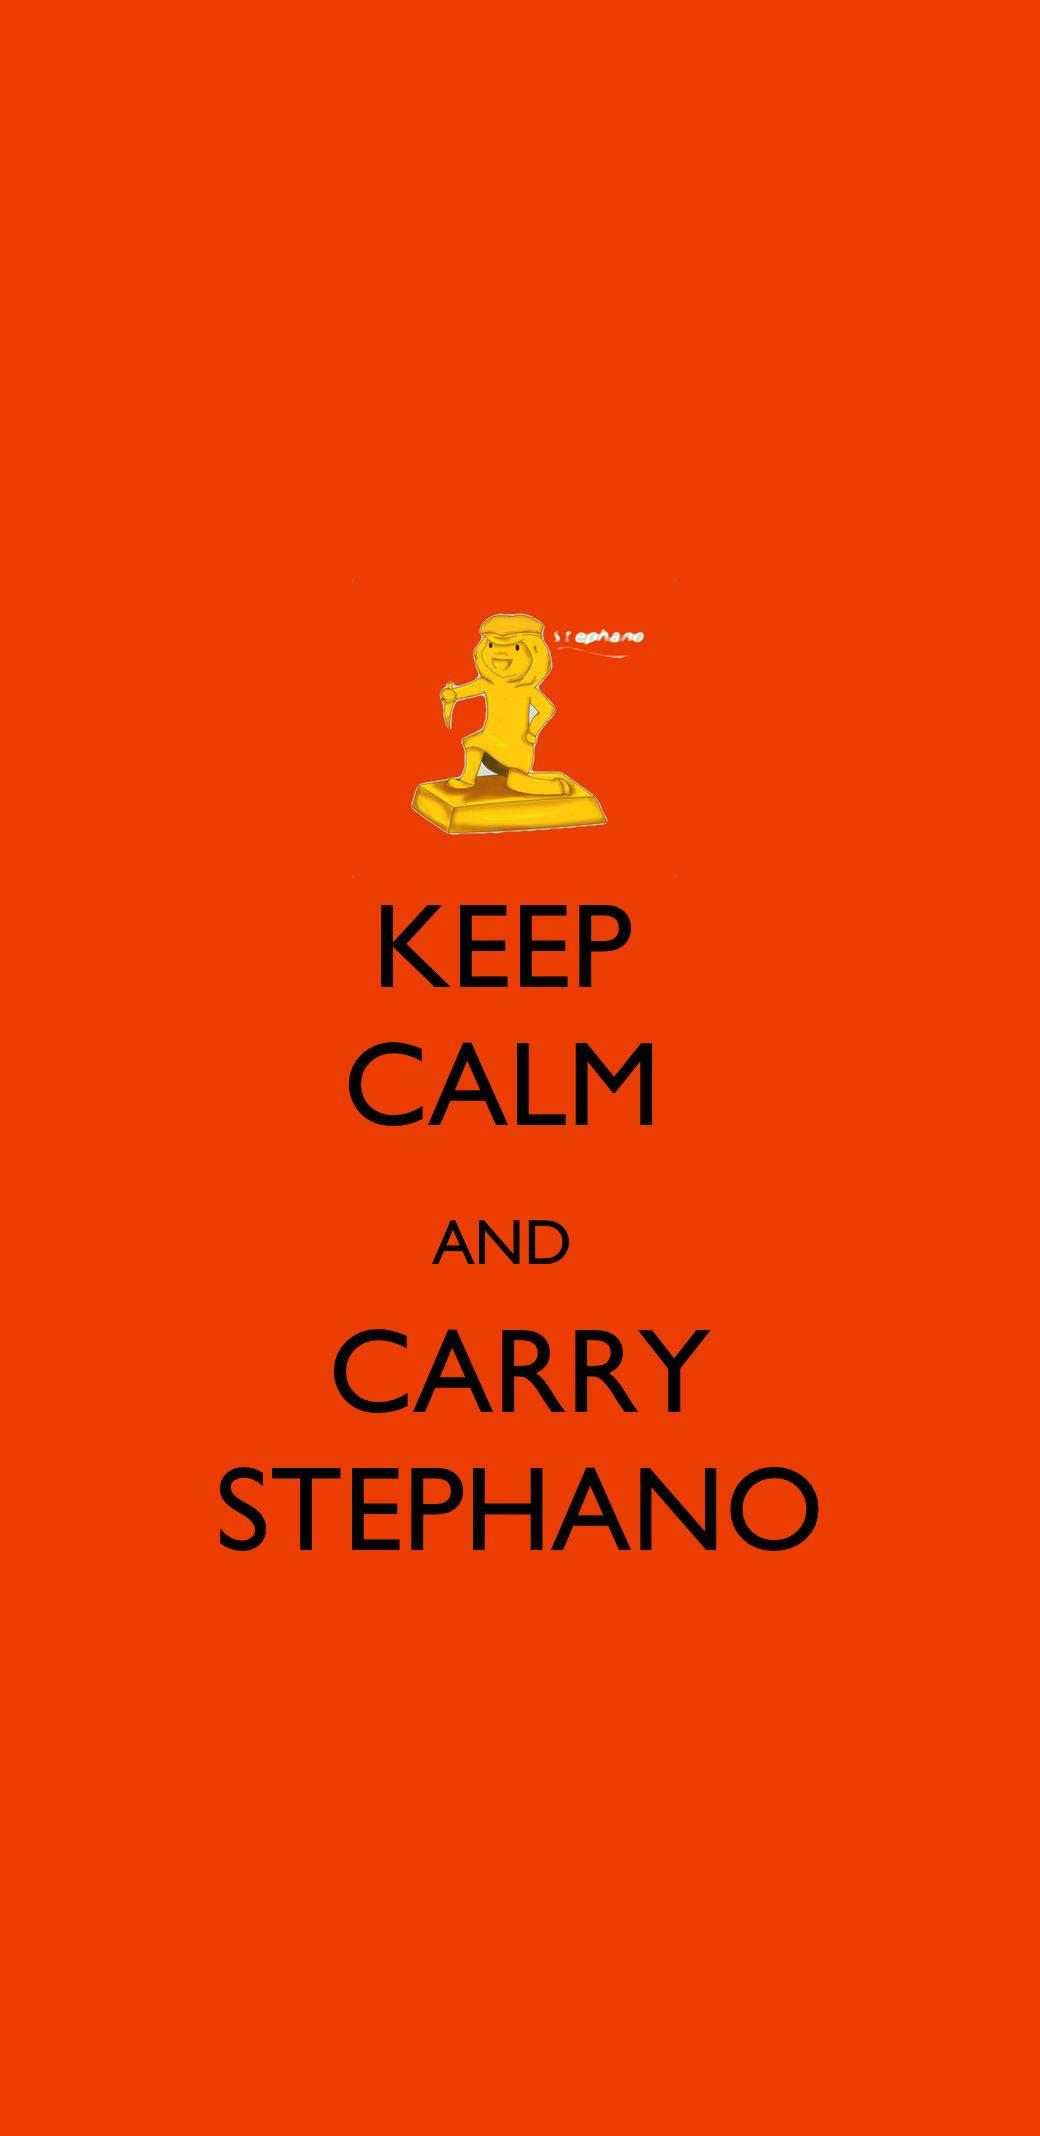 Download Pewdiepie Keep Calm Slogan Wallpaper 